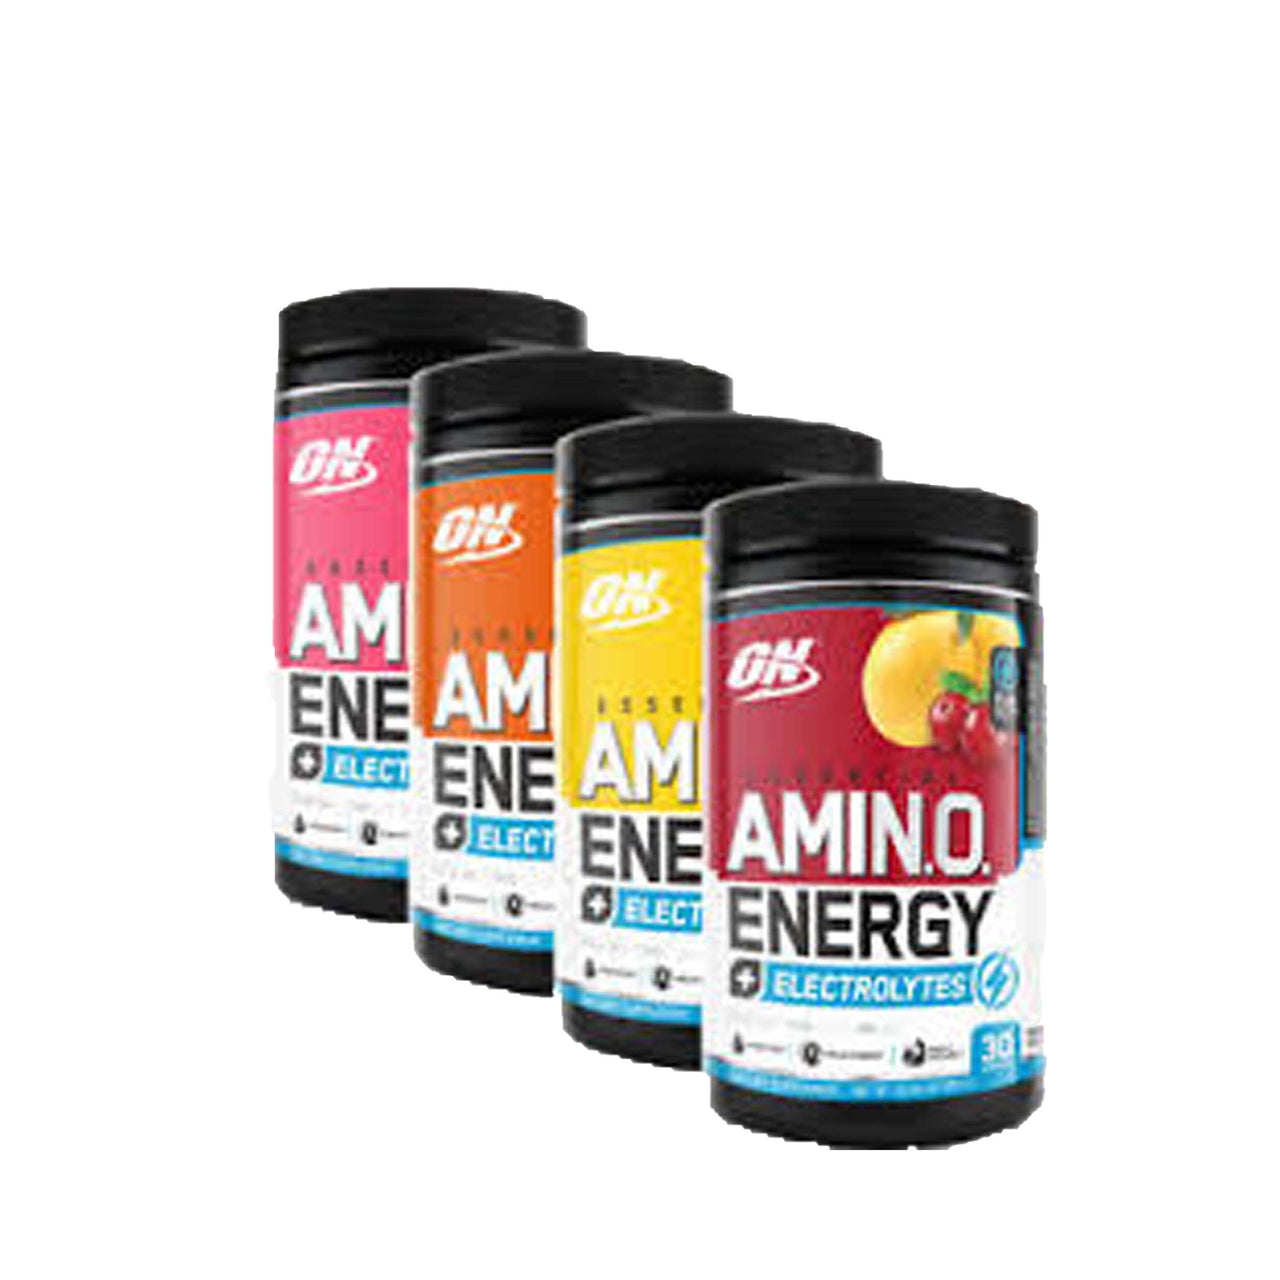 Amino Energy + Electrolytes 285g - Nutrition Co Australia